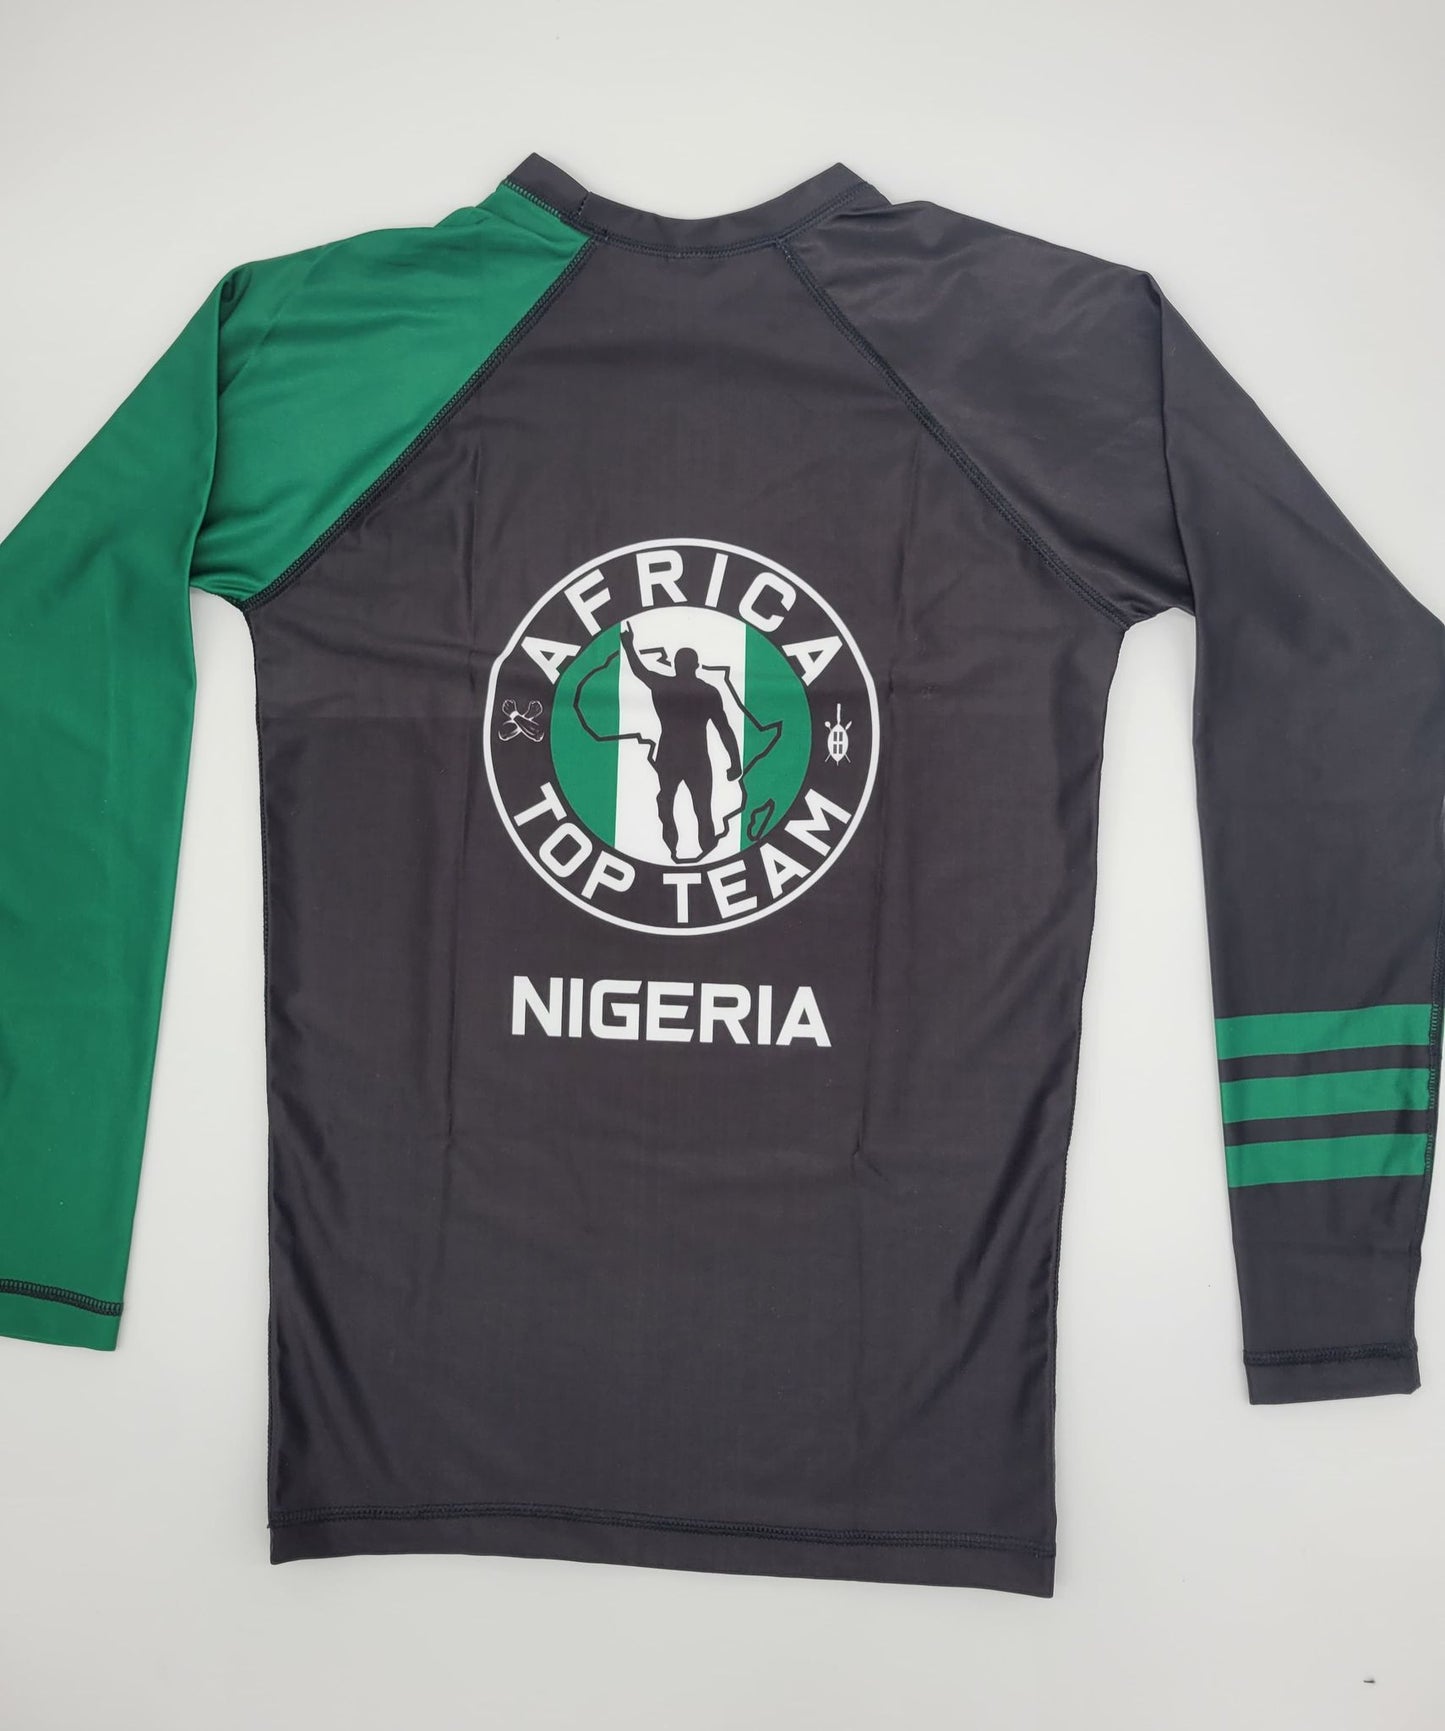 Africa Top Team Nigeria Green/Black Rash guard and Muay Thai Set   Boxing, MMA